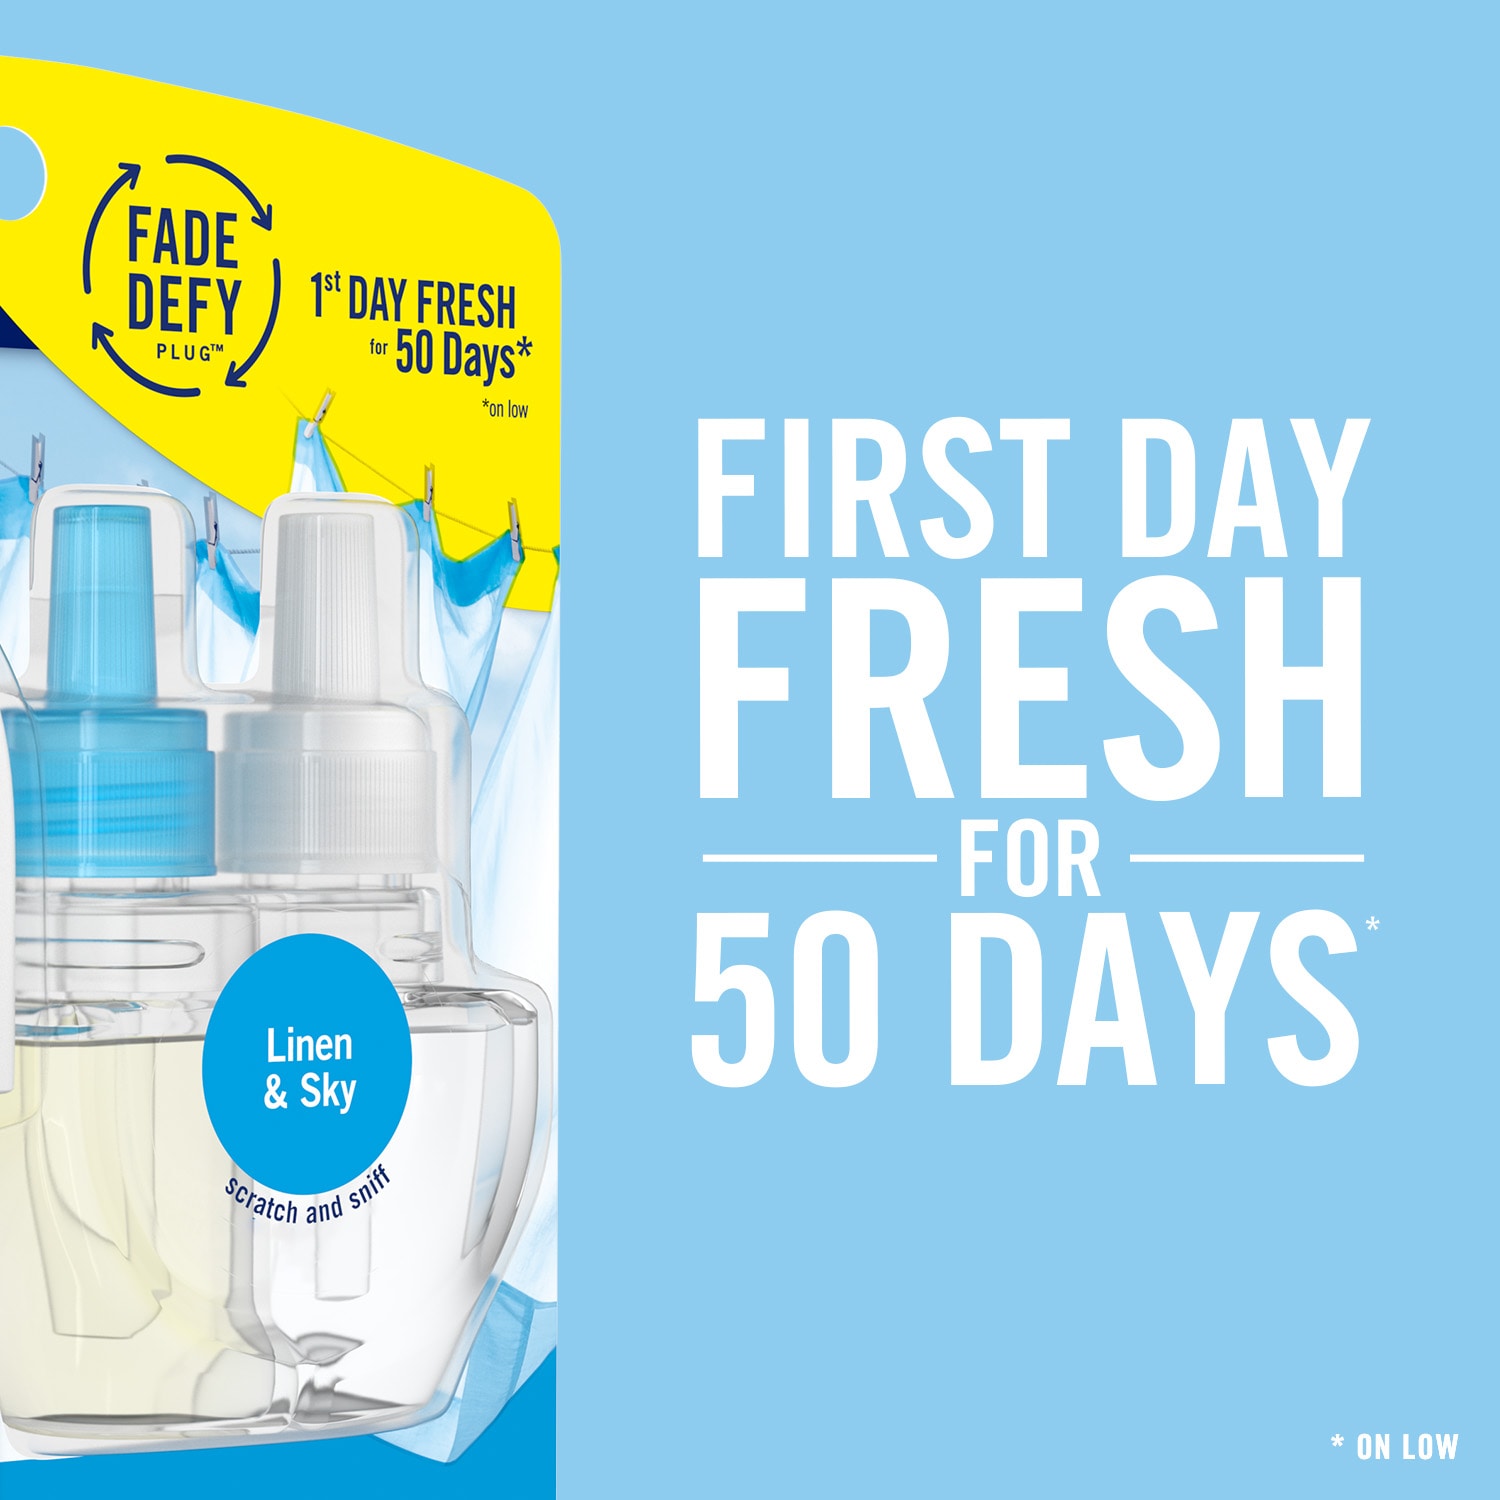 Febreze Odor-Fighting Fade Defy PLUG Air Freshener Refill, Linen & Sky, (3)  .87 fl. oz. Oil Refills